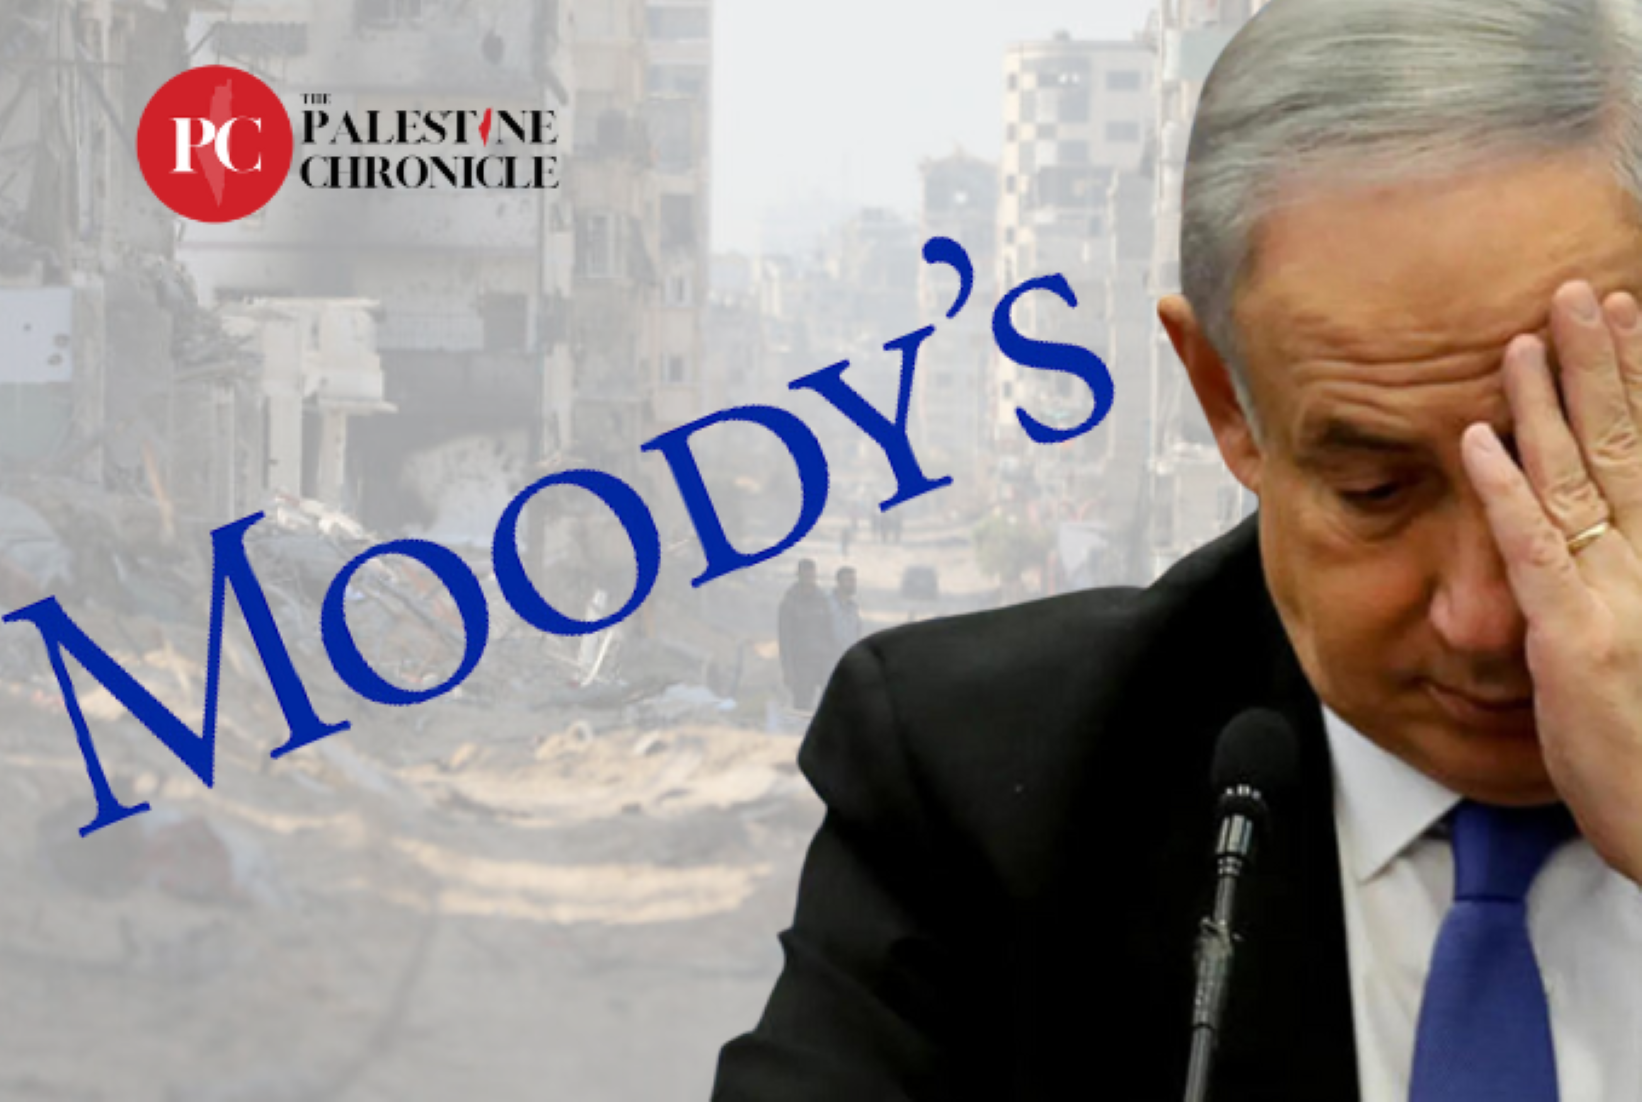 The Future is Bleak – Moody’s Downgrades Israel’s Economy